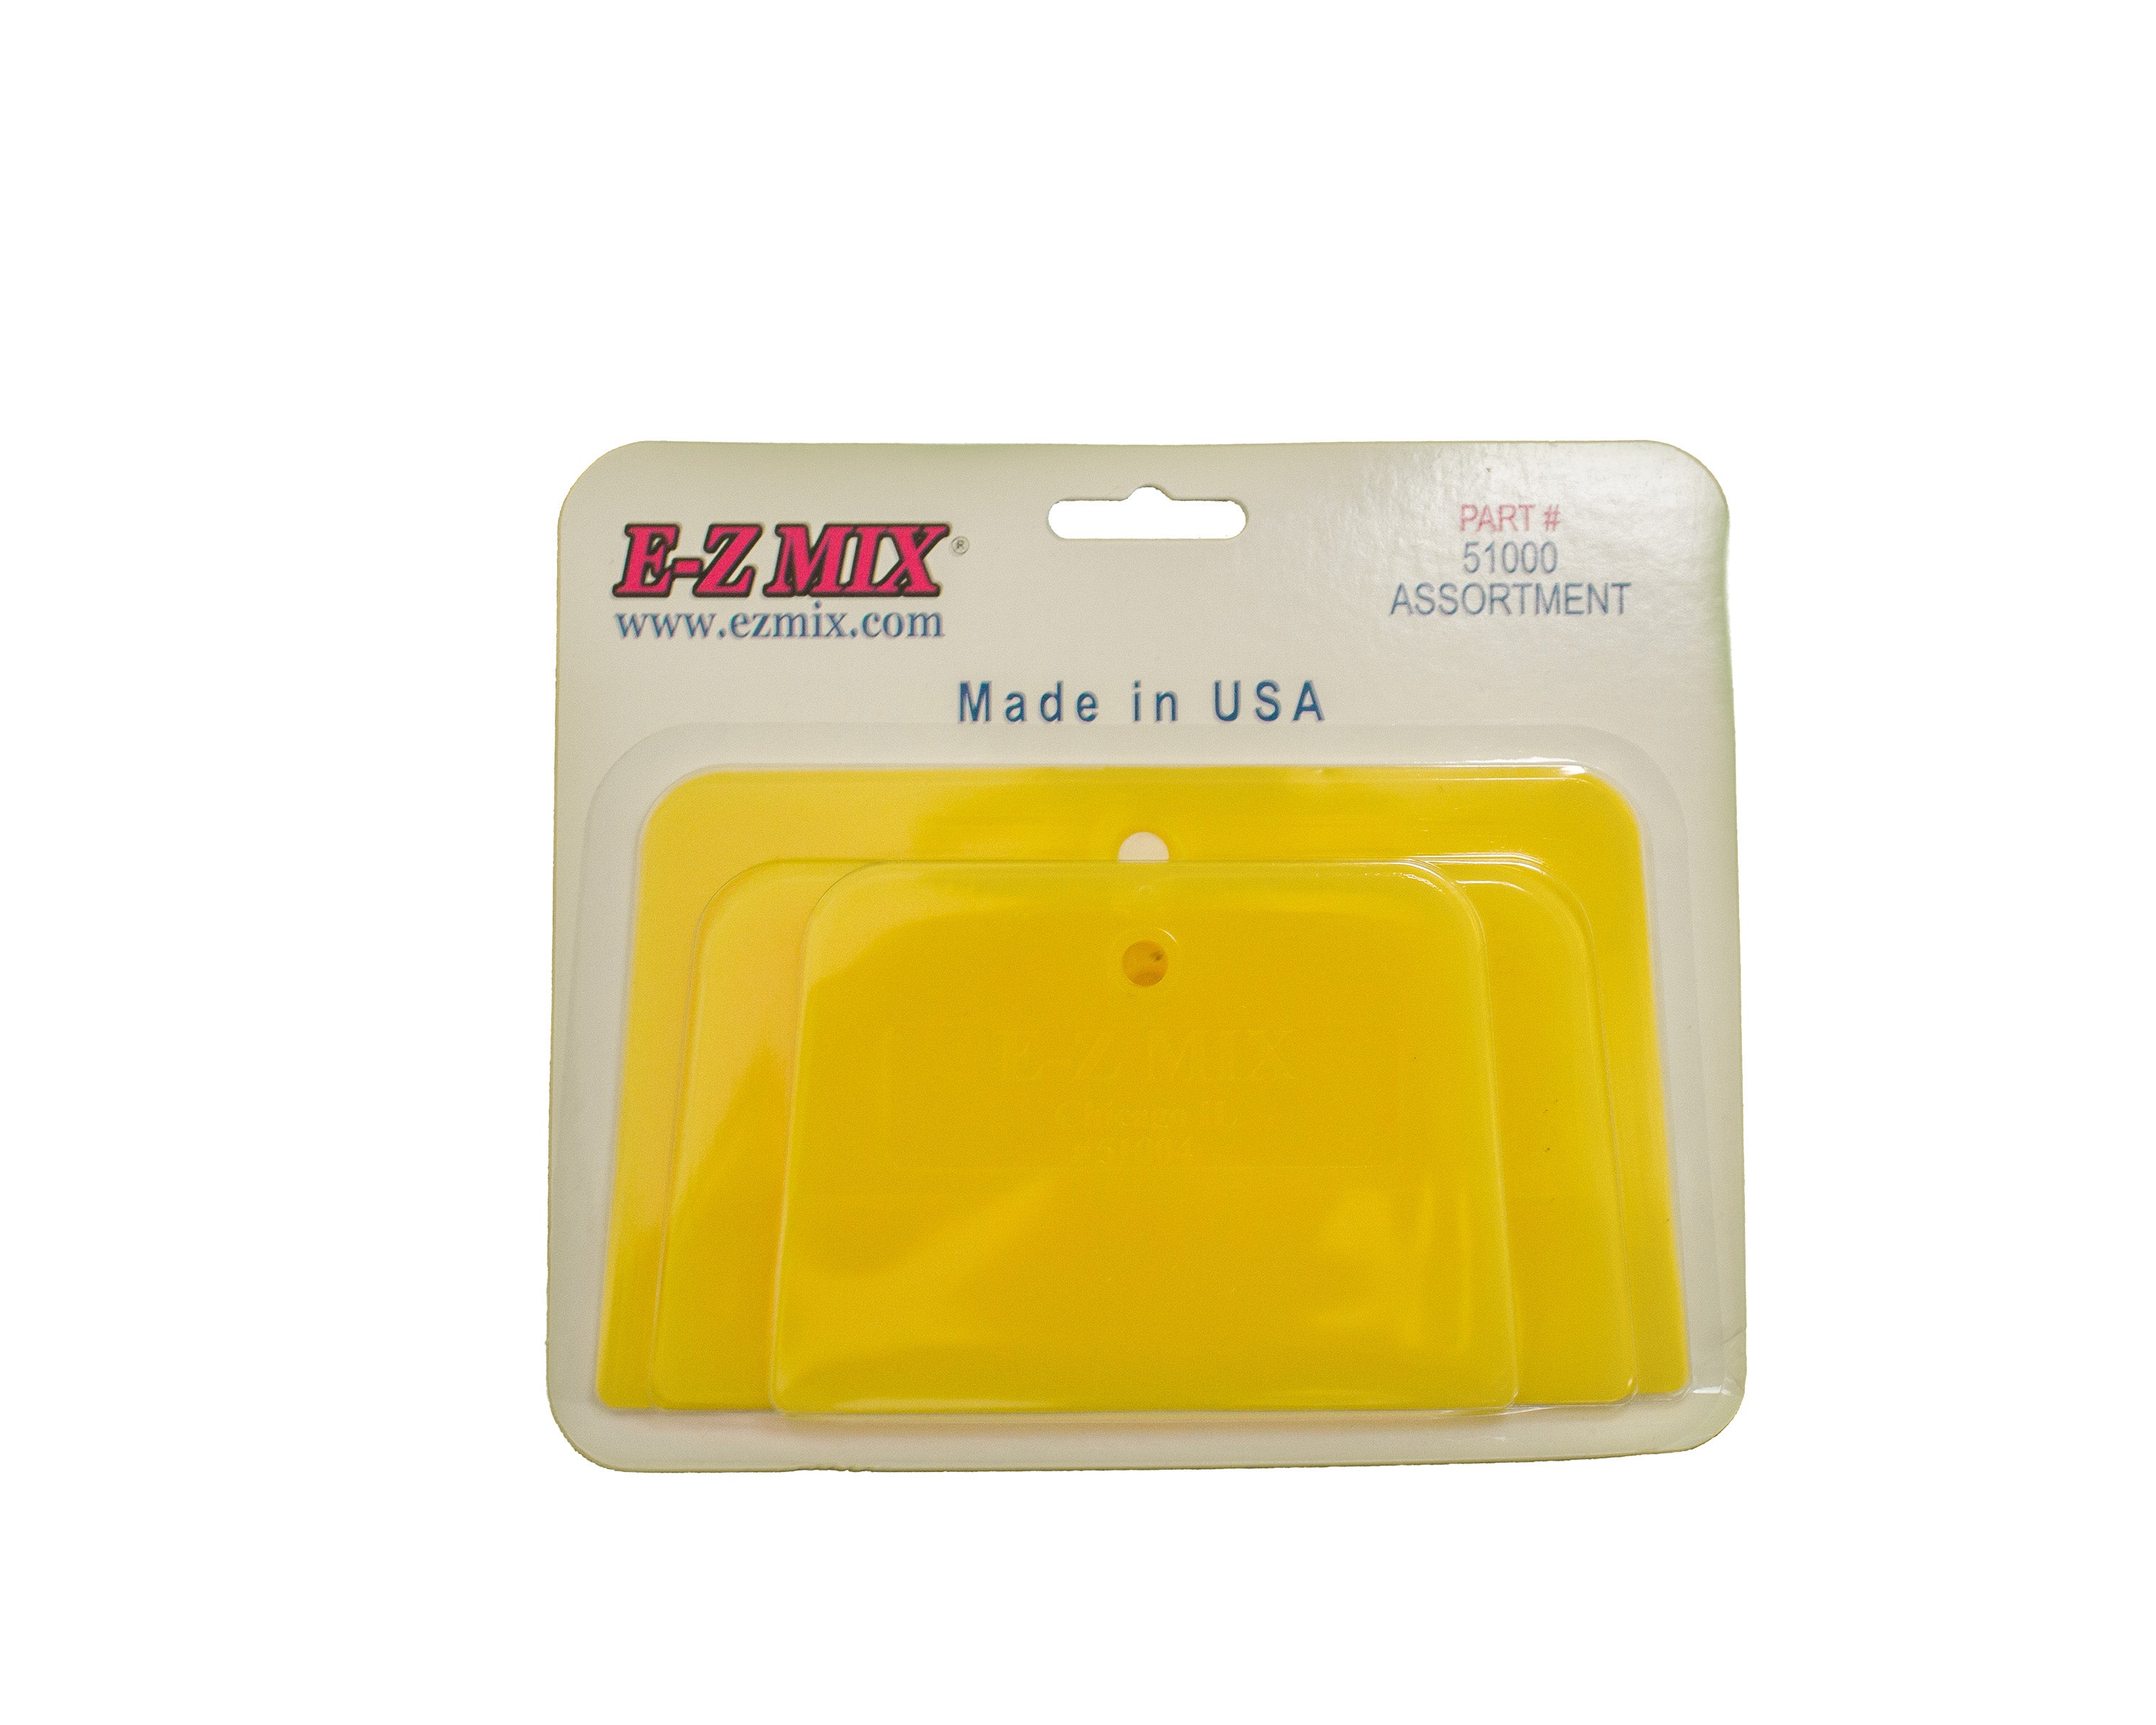 E-Z Mix 4 Plastic Body Filler/Glaze Spreaders 51004 - 100 Qty.